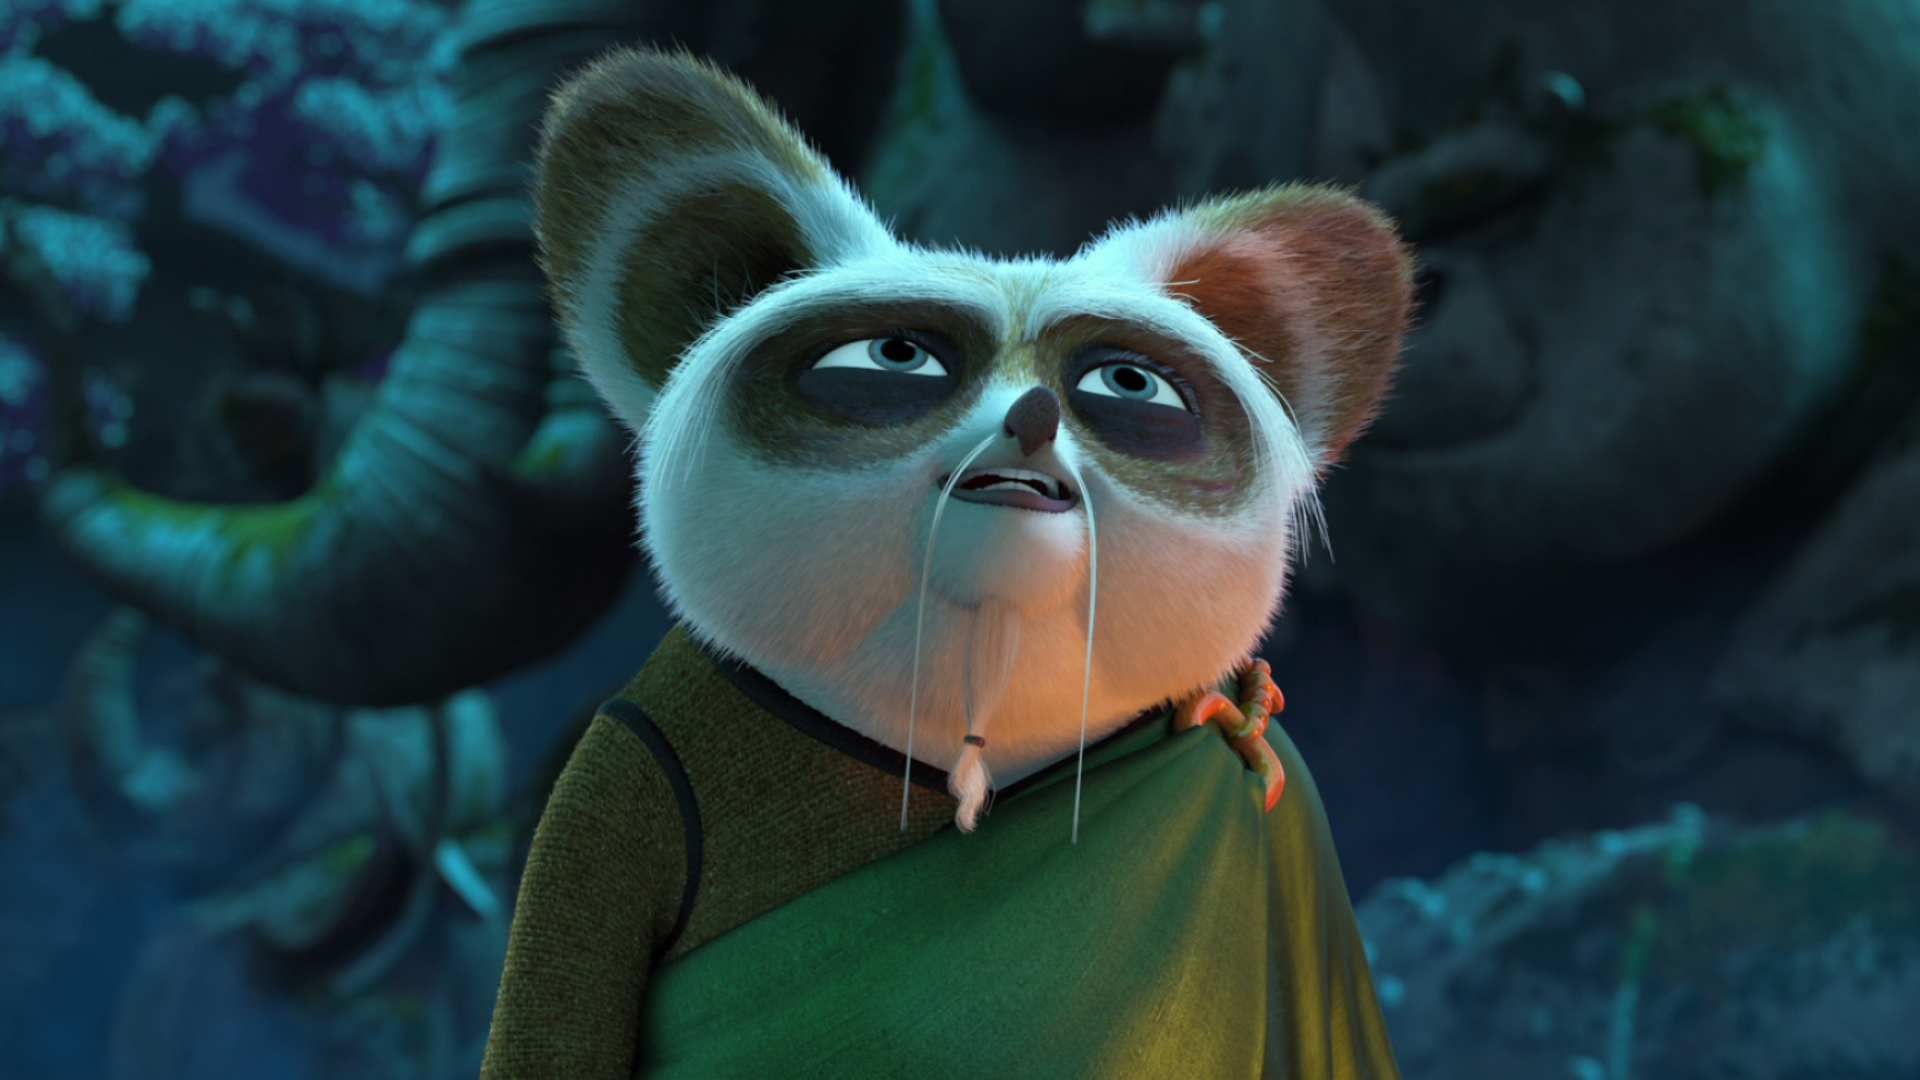 Master Shifu: Kung Fu Panda 3, Turned into a jade soldier and a member of Kai's army. 1920x1080 Full HD Wallpaper.